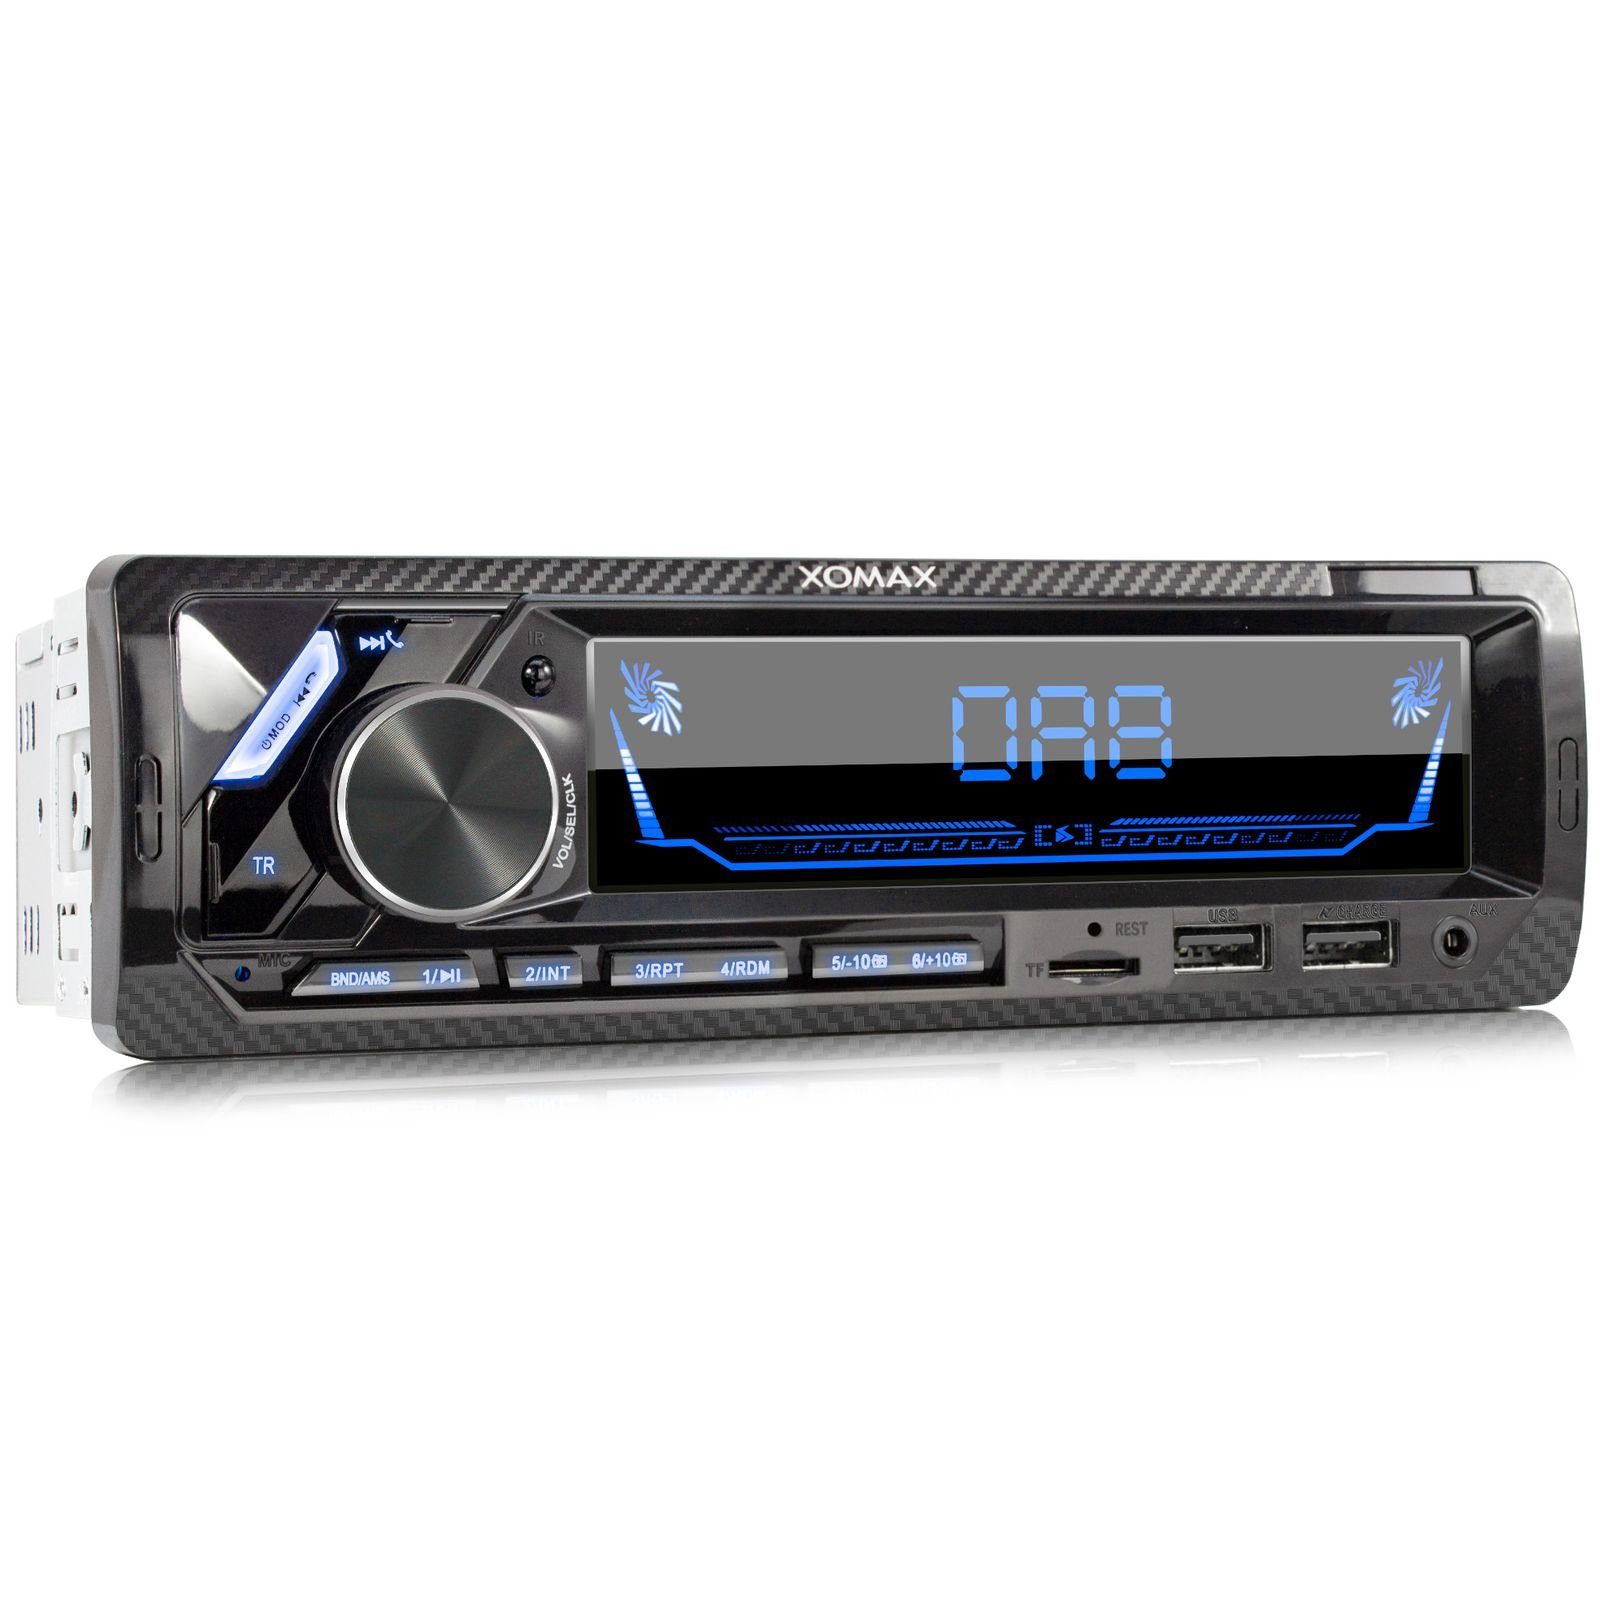 XOMAX XM-RD285 Autoradio mit DAB+ Bluetooth, DIN SD, USB, 2x 1 plus, AUX, Autoradio